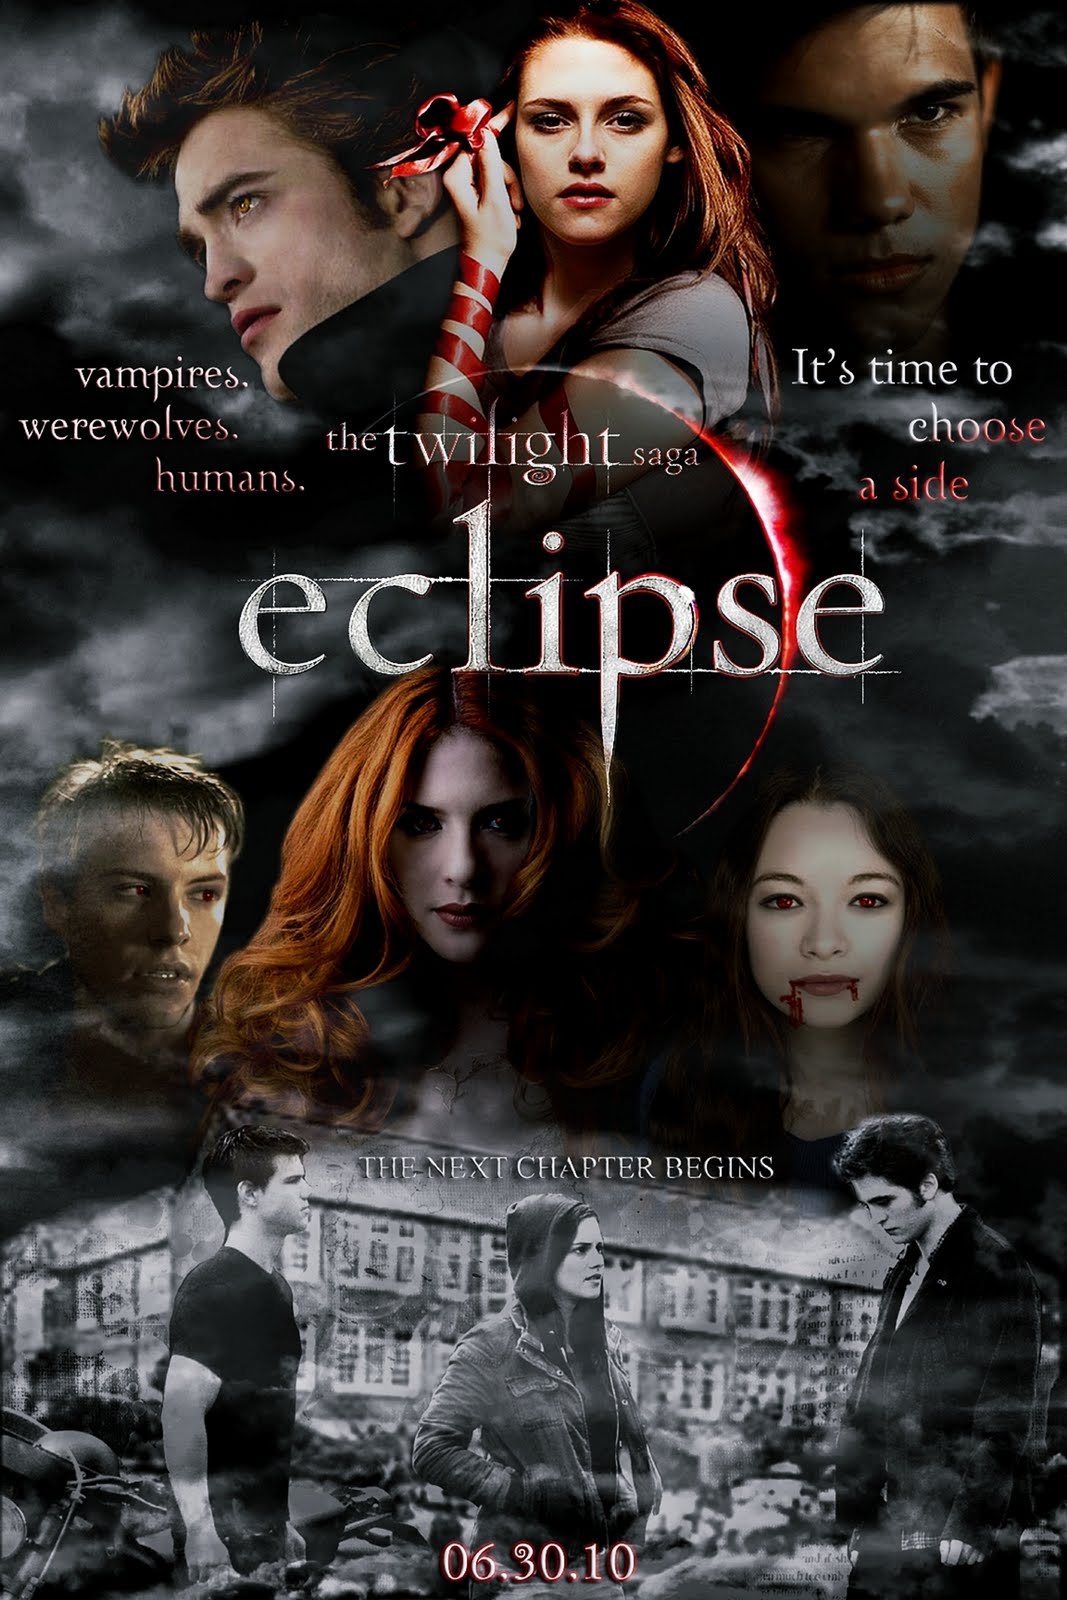 http://3.bp.blogspot.com/_JOIzlznQDJc/TCXCUQBmmiI/AAAAAAAABNU/aIDjqUpbHZA/s1600/Poster-Twilight-Saga-Eclipse-Fanmade-twilight-series-9477225-1152-1728.jpg